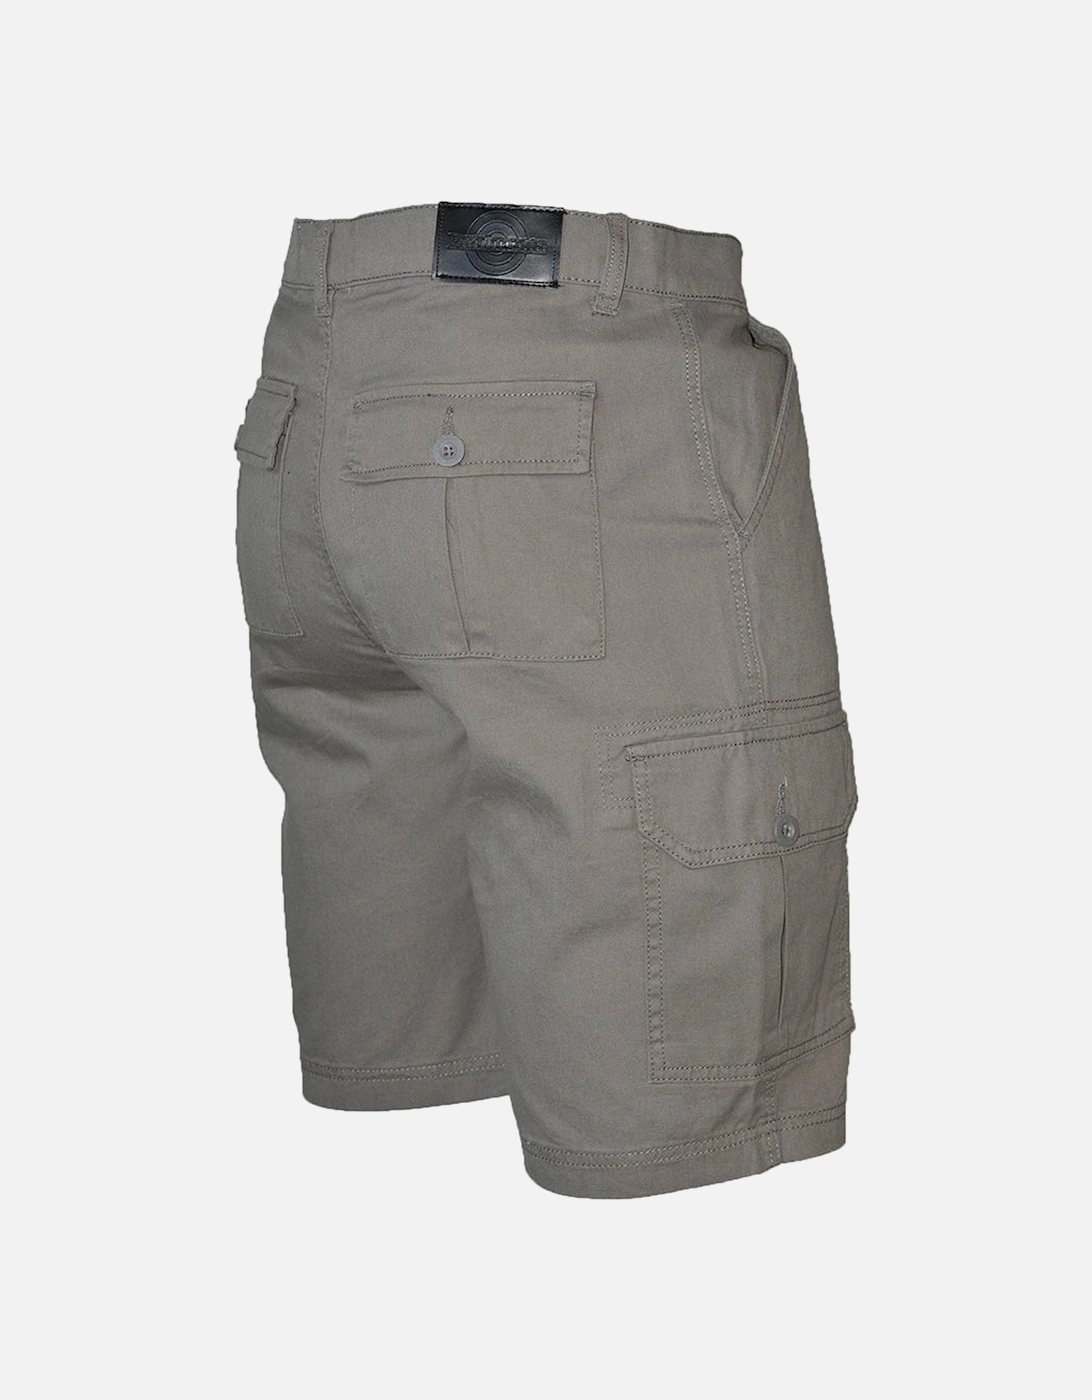 Mens Classic Mod Cargo Shorts - Navy